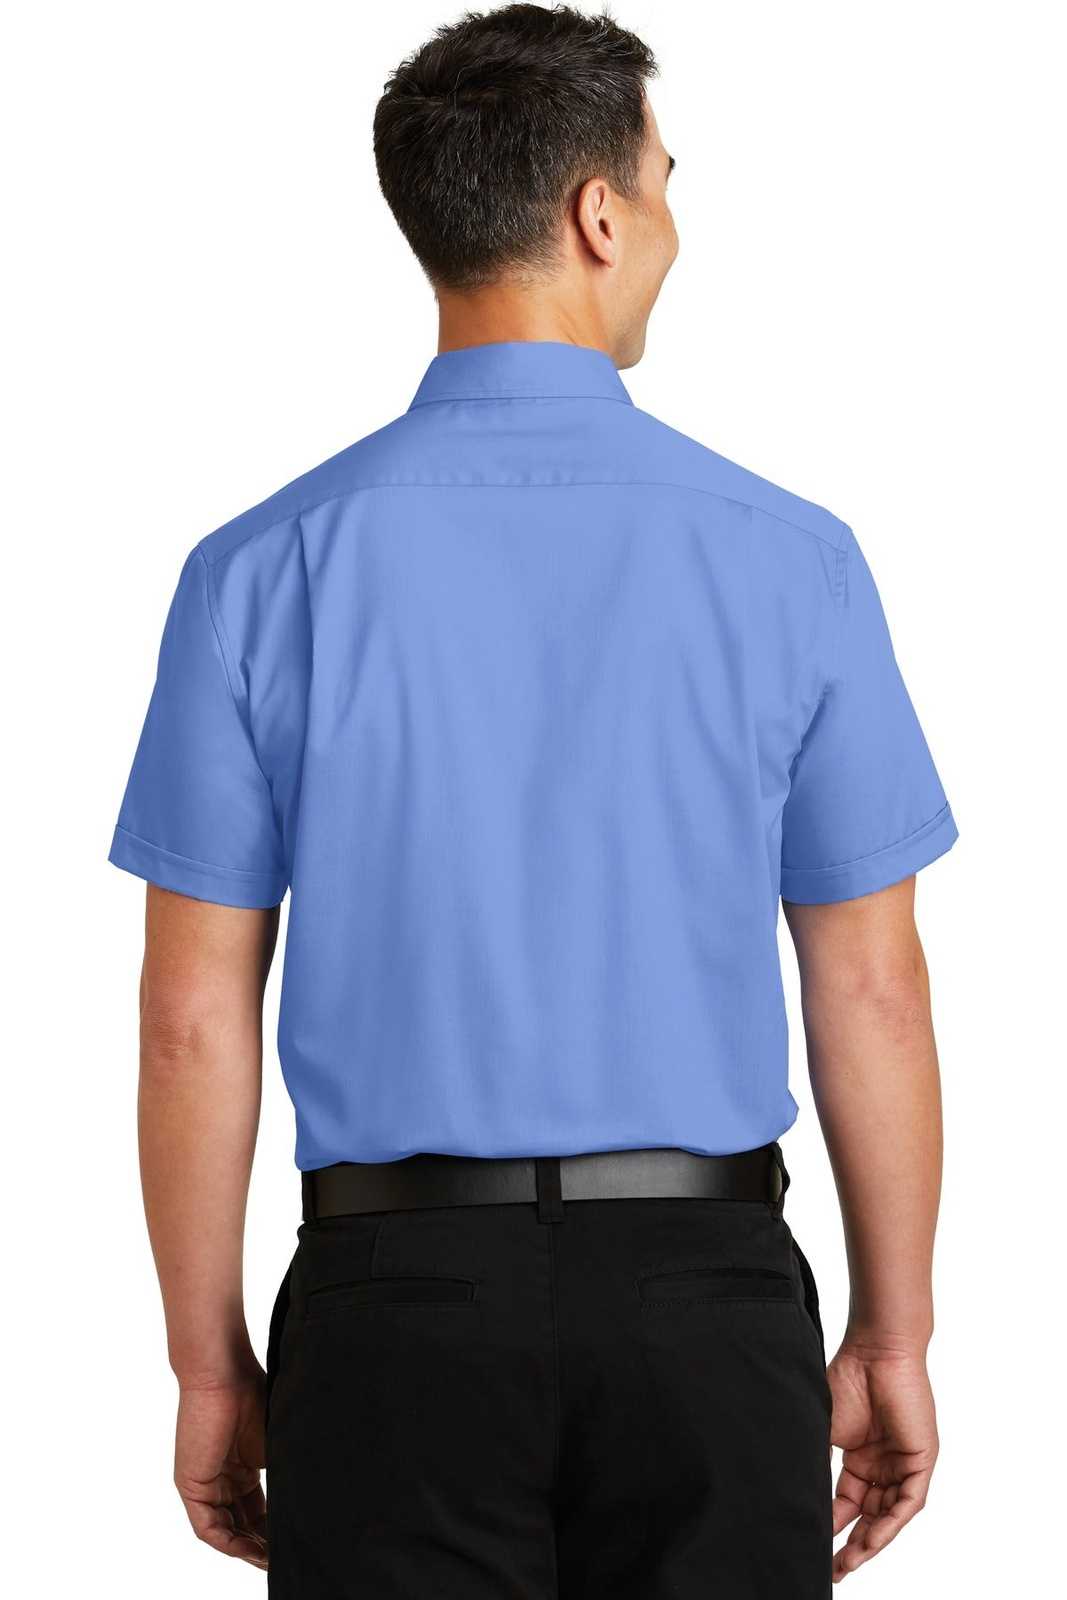 Port Authority S664 Short Sleeve Superpro Twill Shirt - Ultramarine Blue - HIT a Double - 2